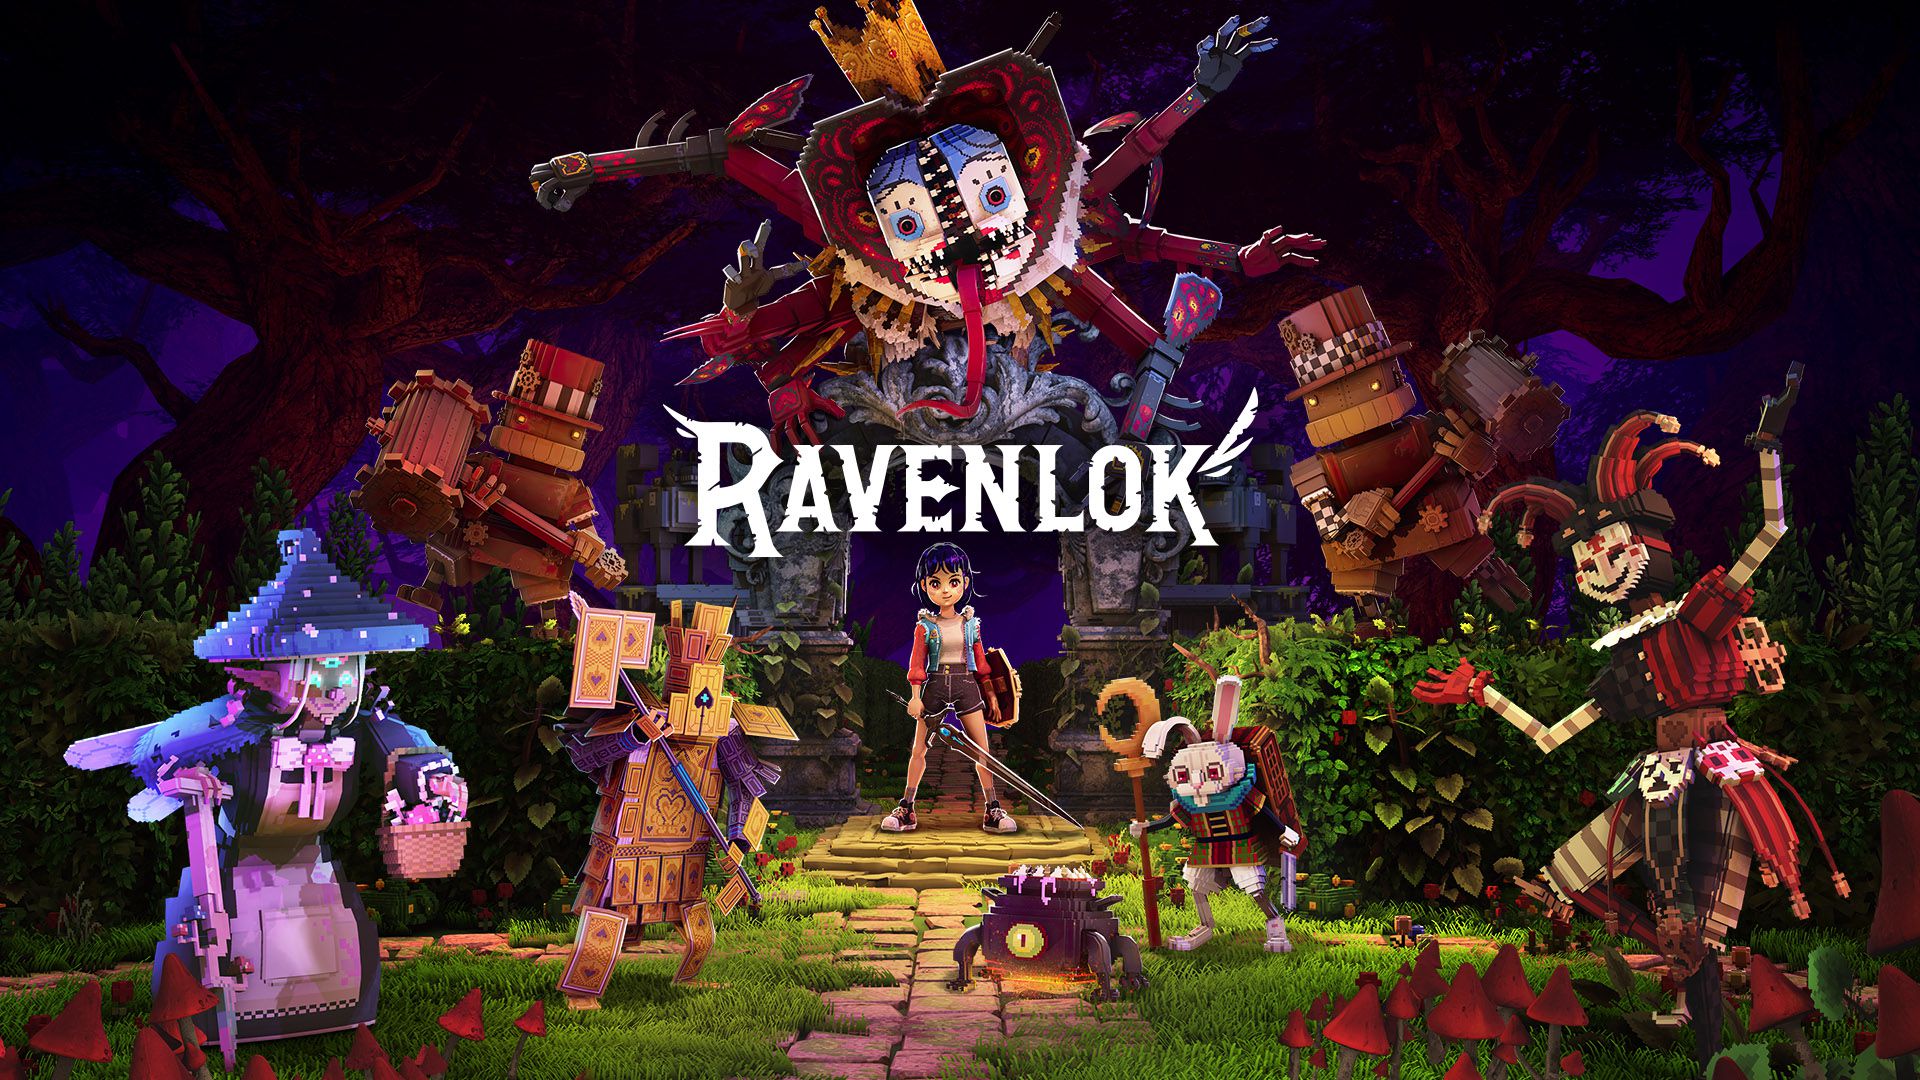 Ravenlok download the new version for windows